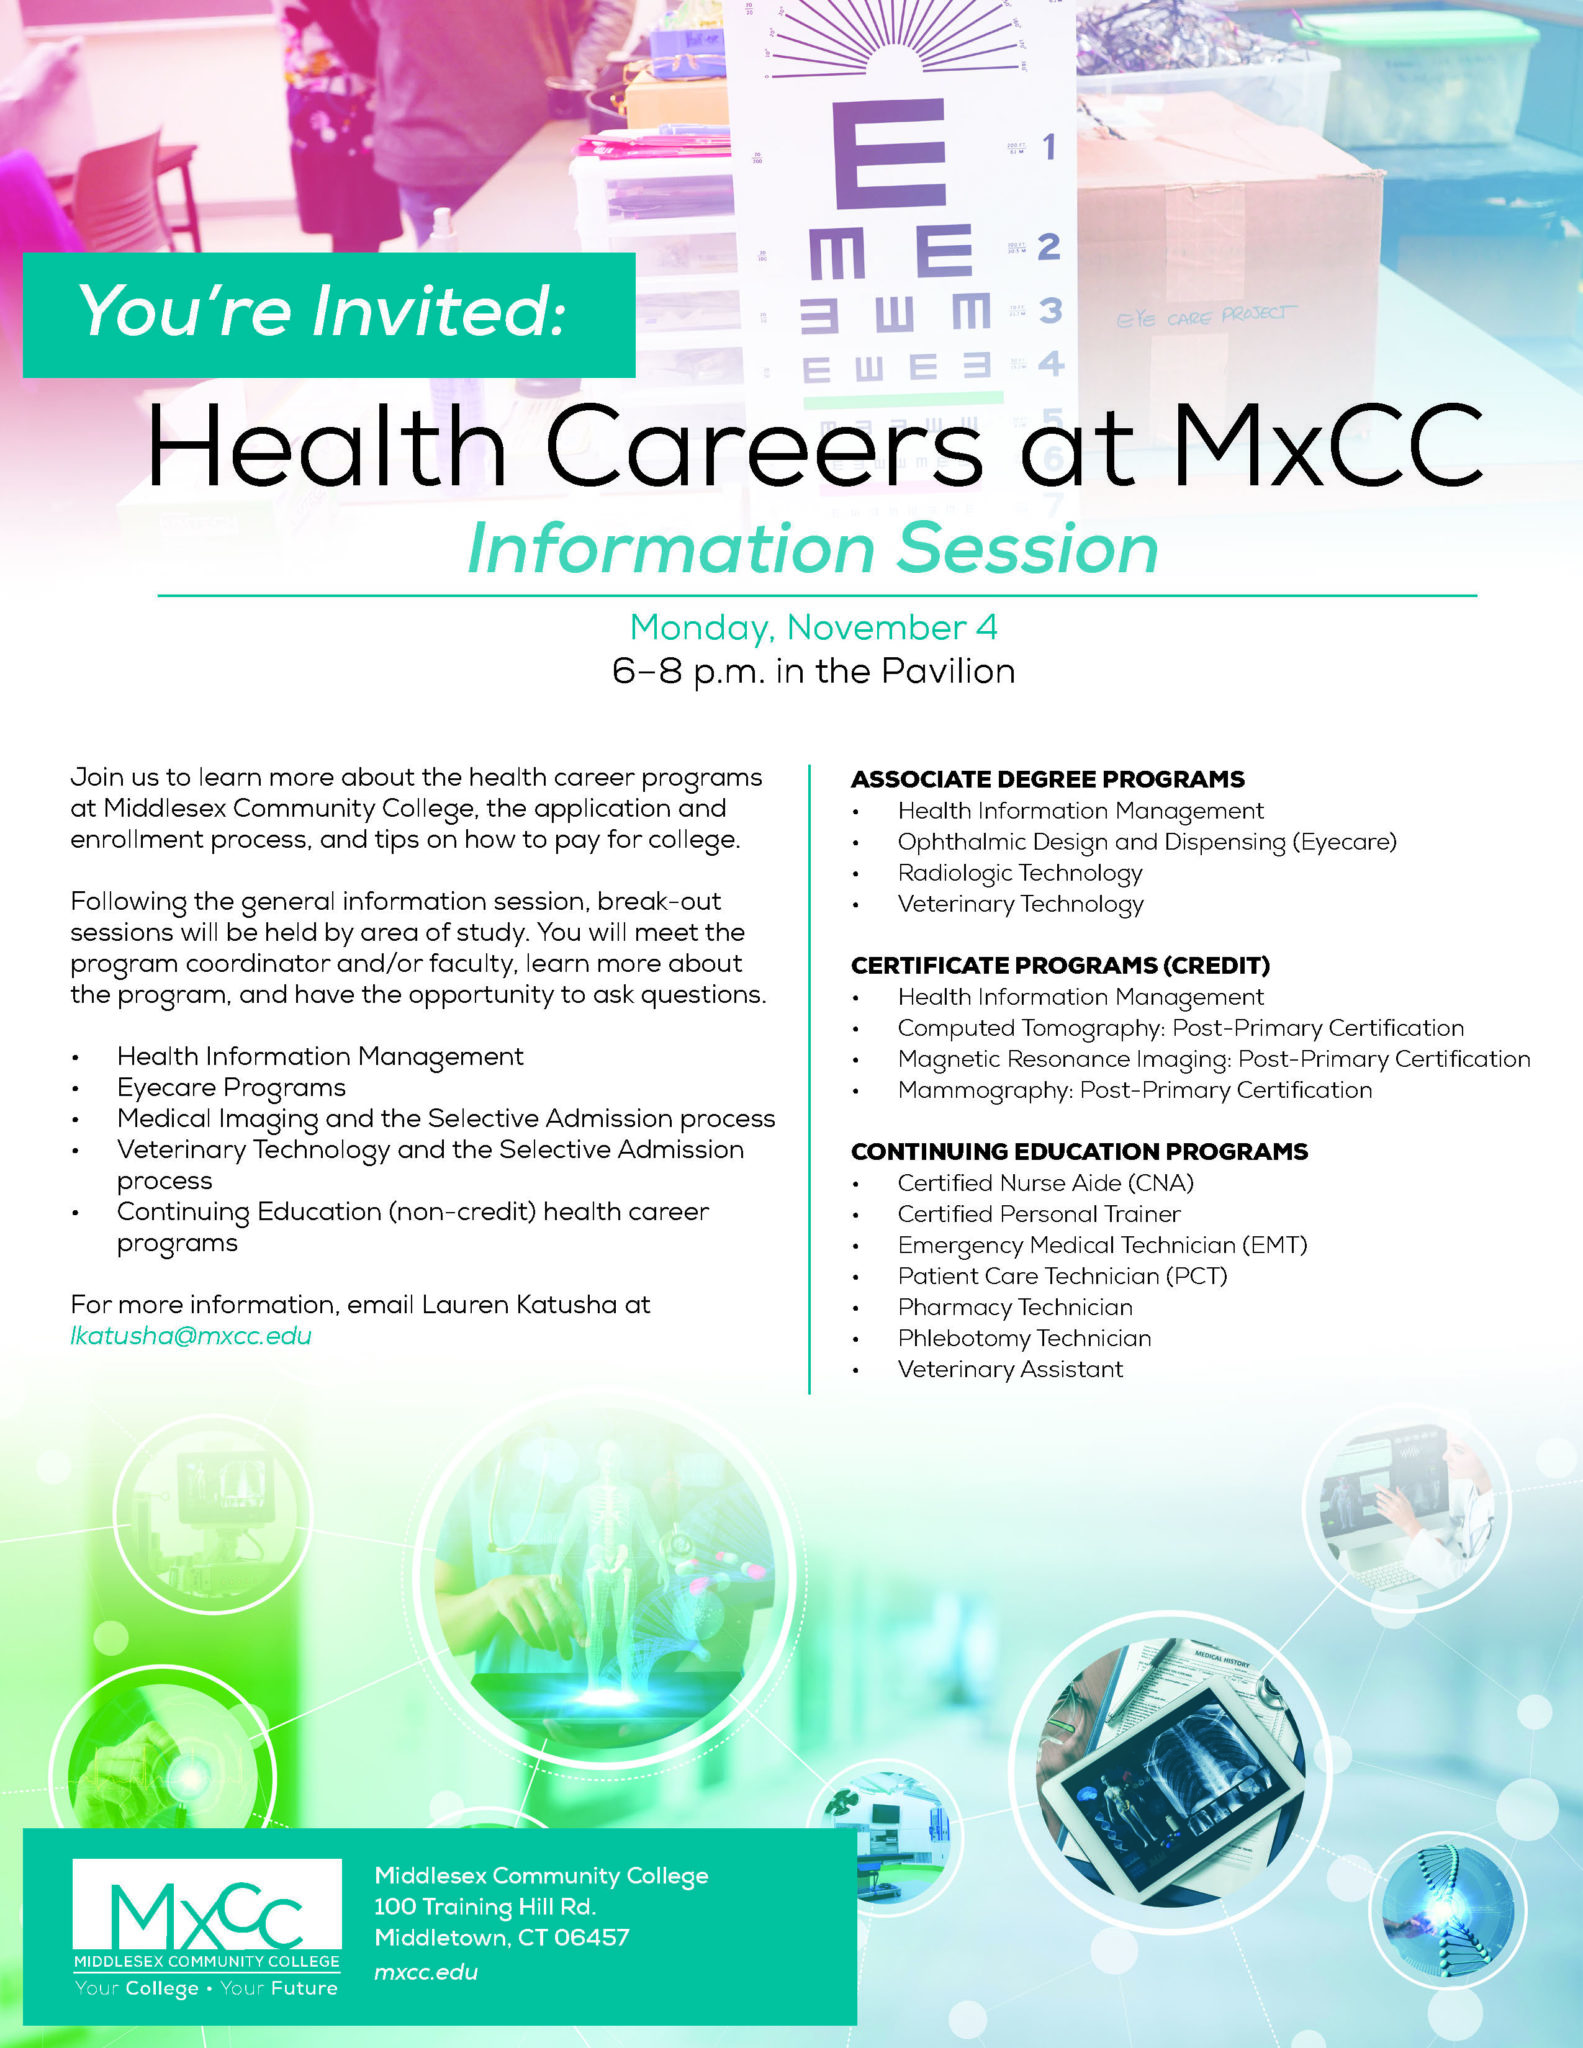 Health careers at MxCC flyer